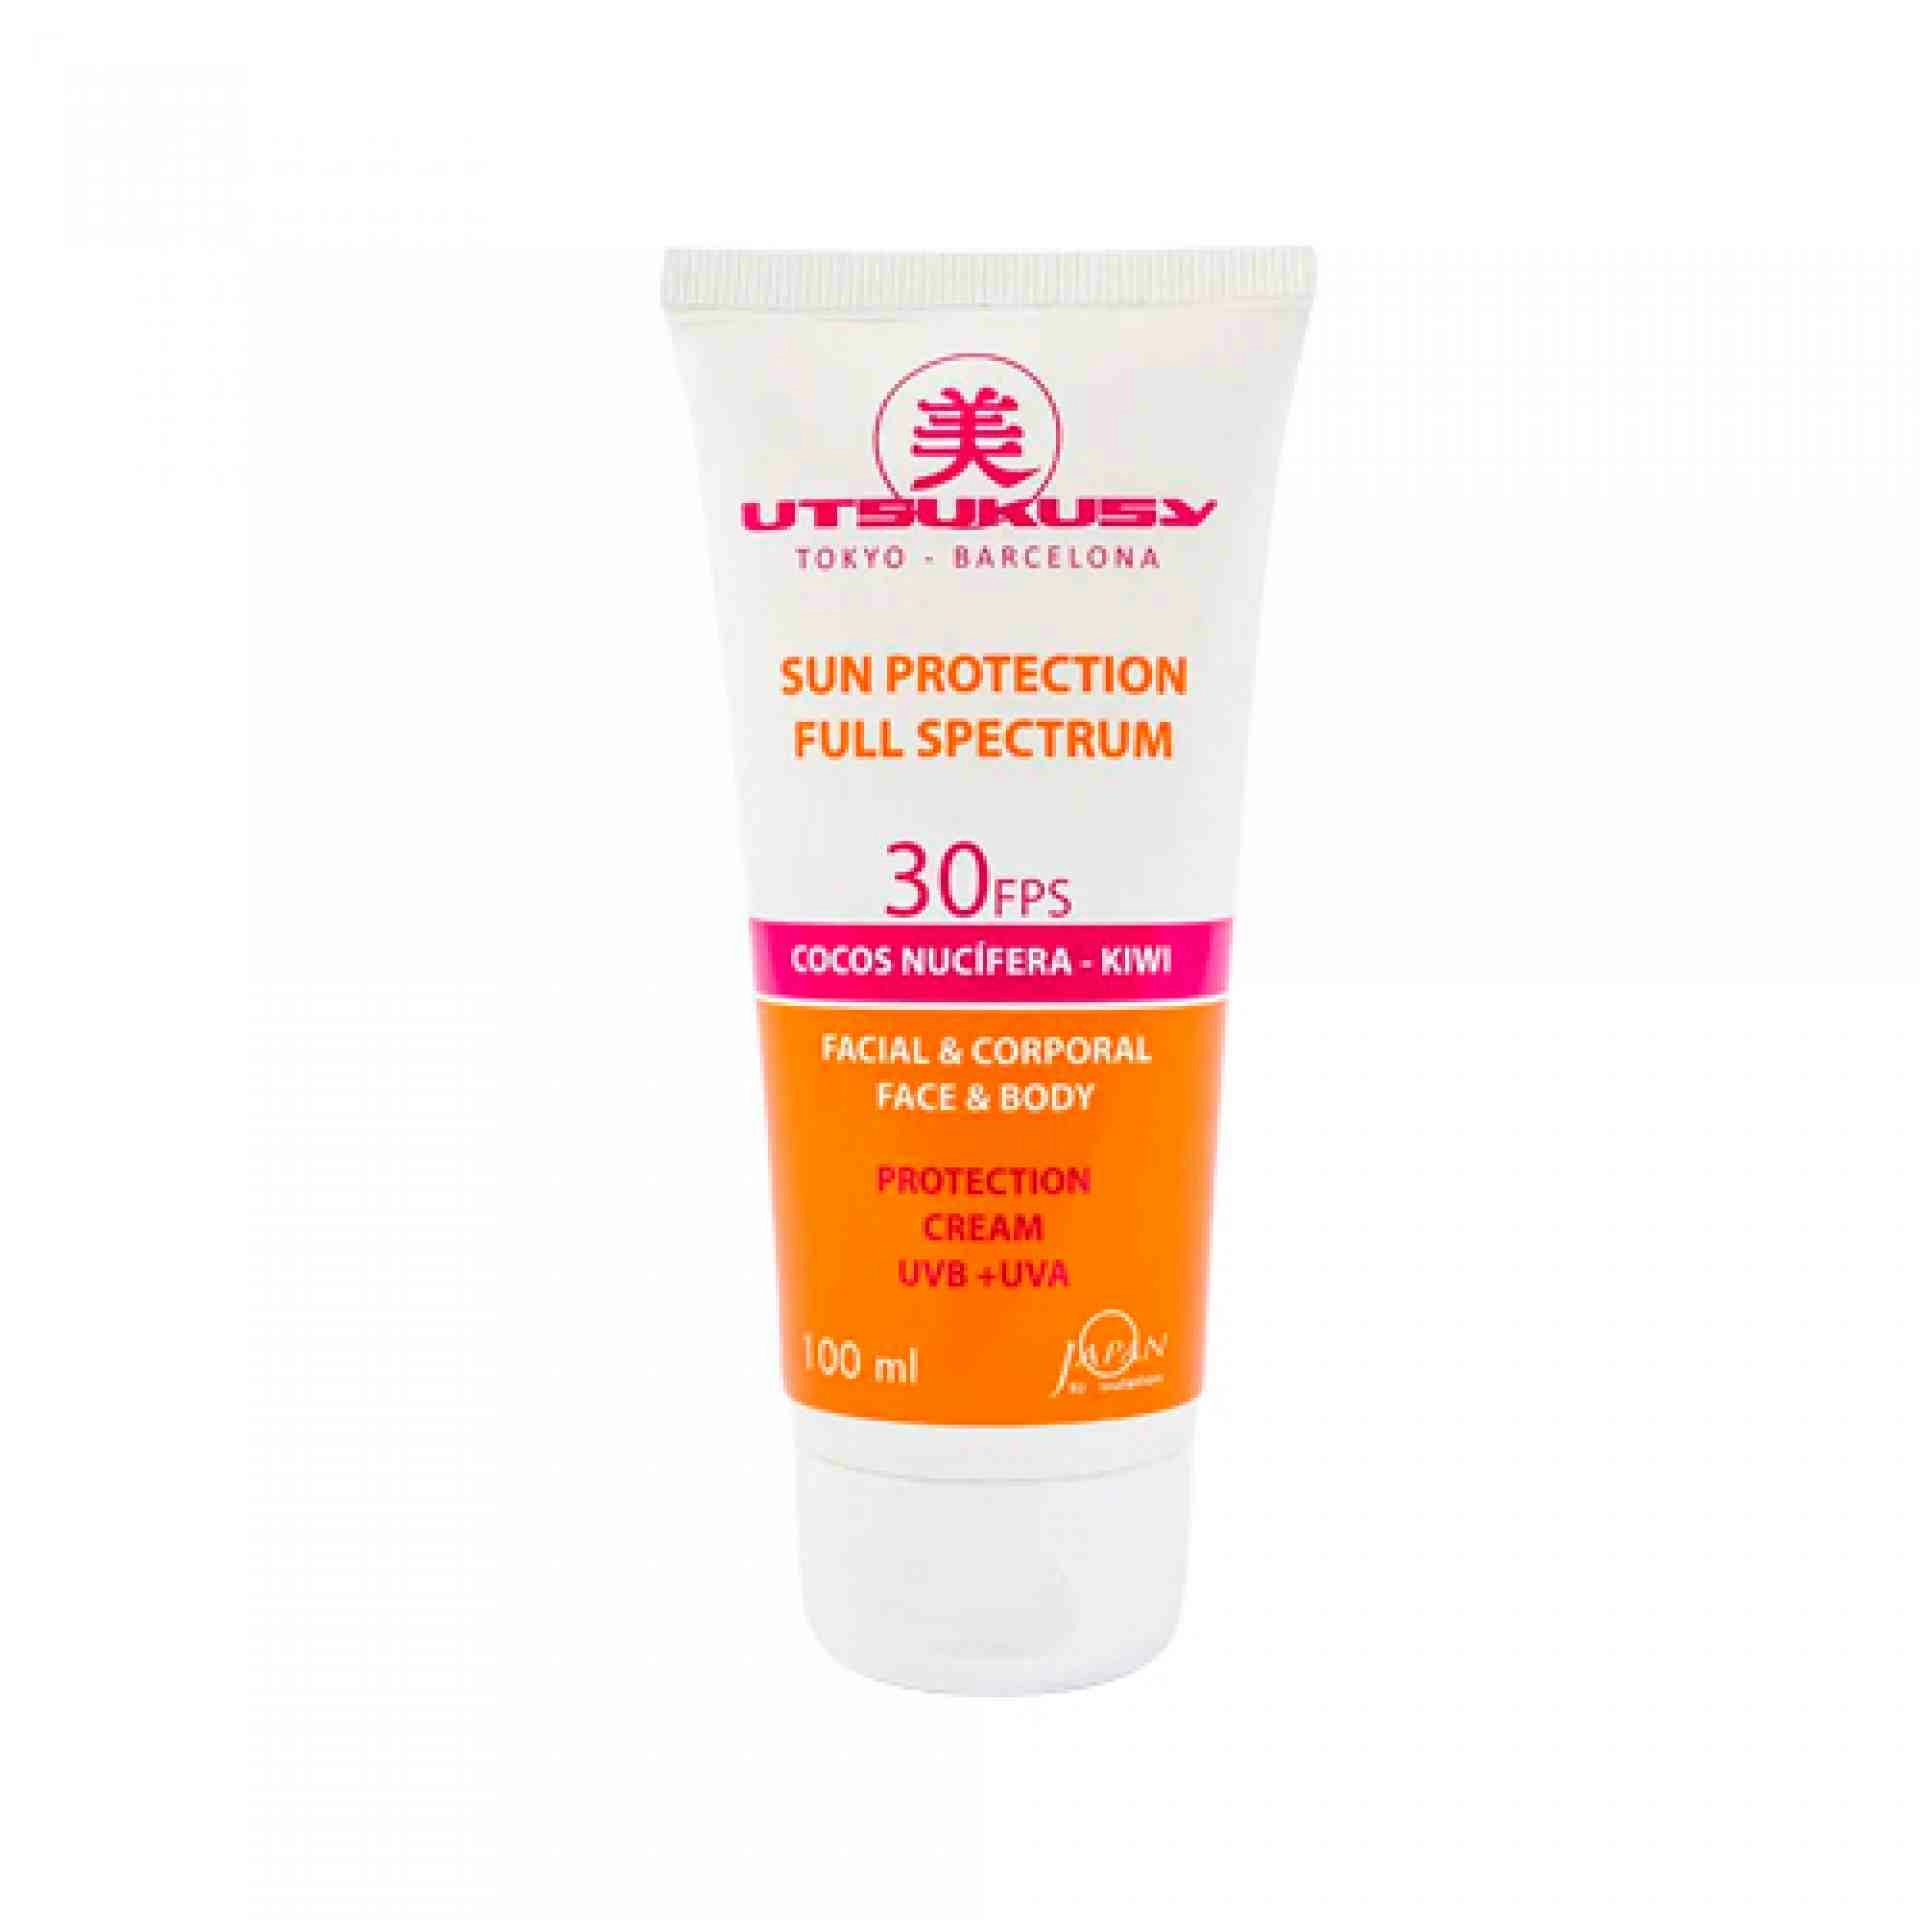 Sun Protect Crema - Protector Solar Facial y Corporal SPF 30 100ml - Utsukusy ®